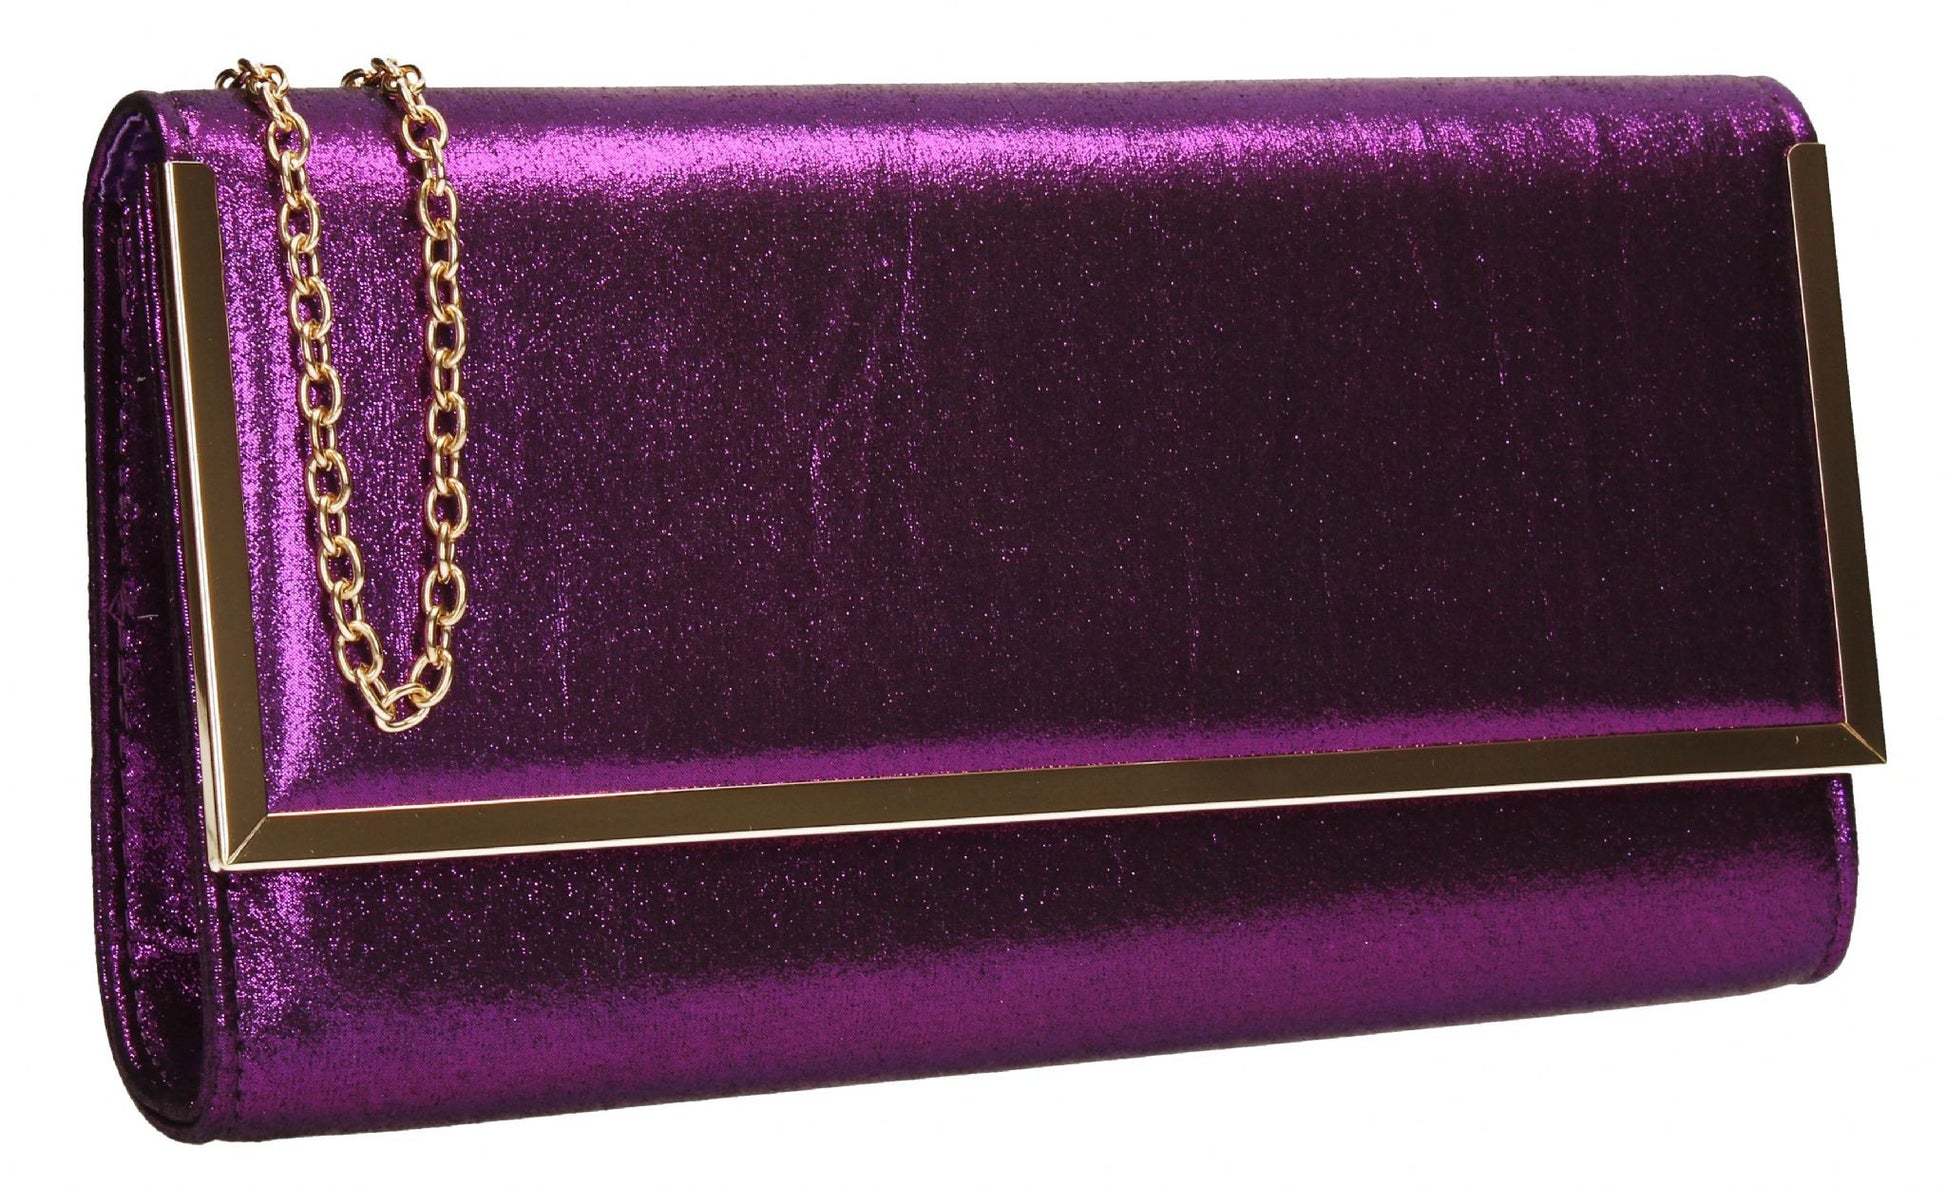 SWANKYSWANS Ruby Clutch Bag Purple Cute Cheap Clutch Bag For Weddings School and Work